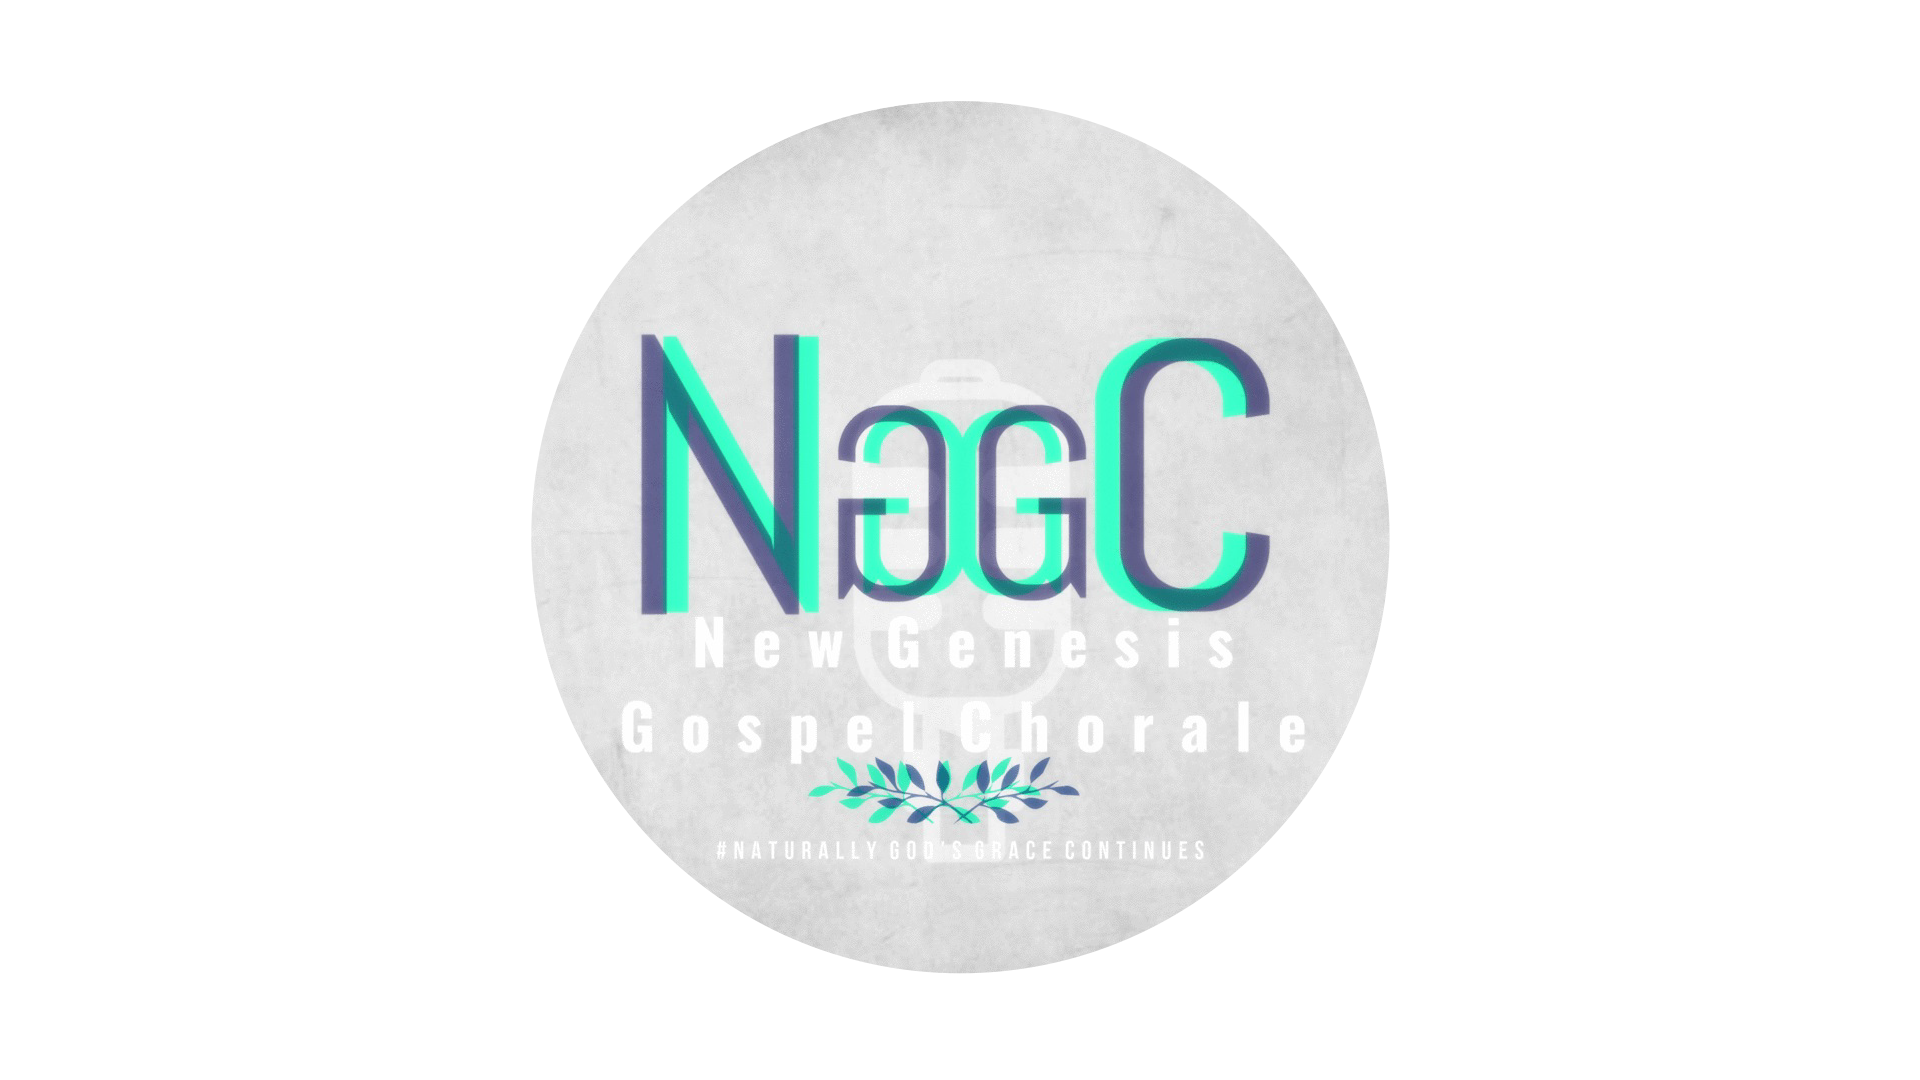 New Genesis Gospel Chorale logo